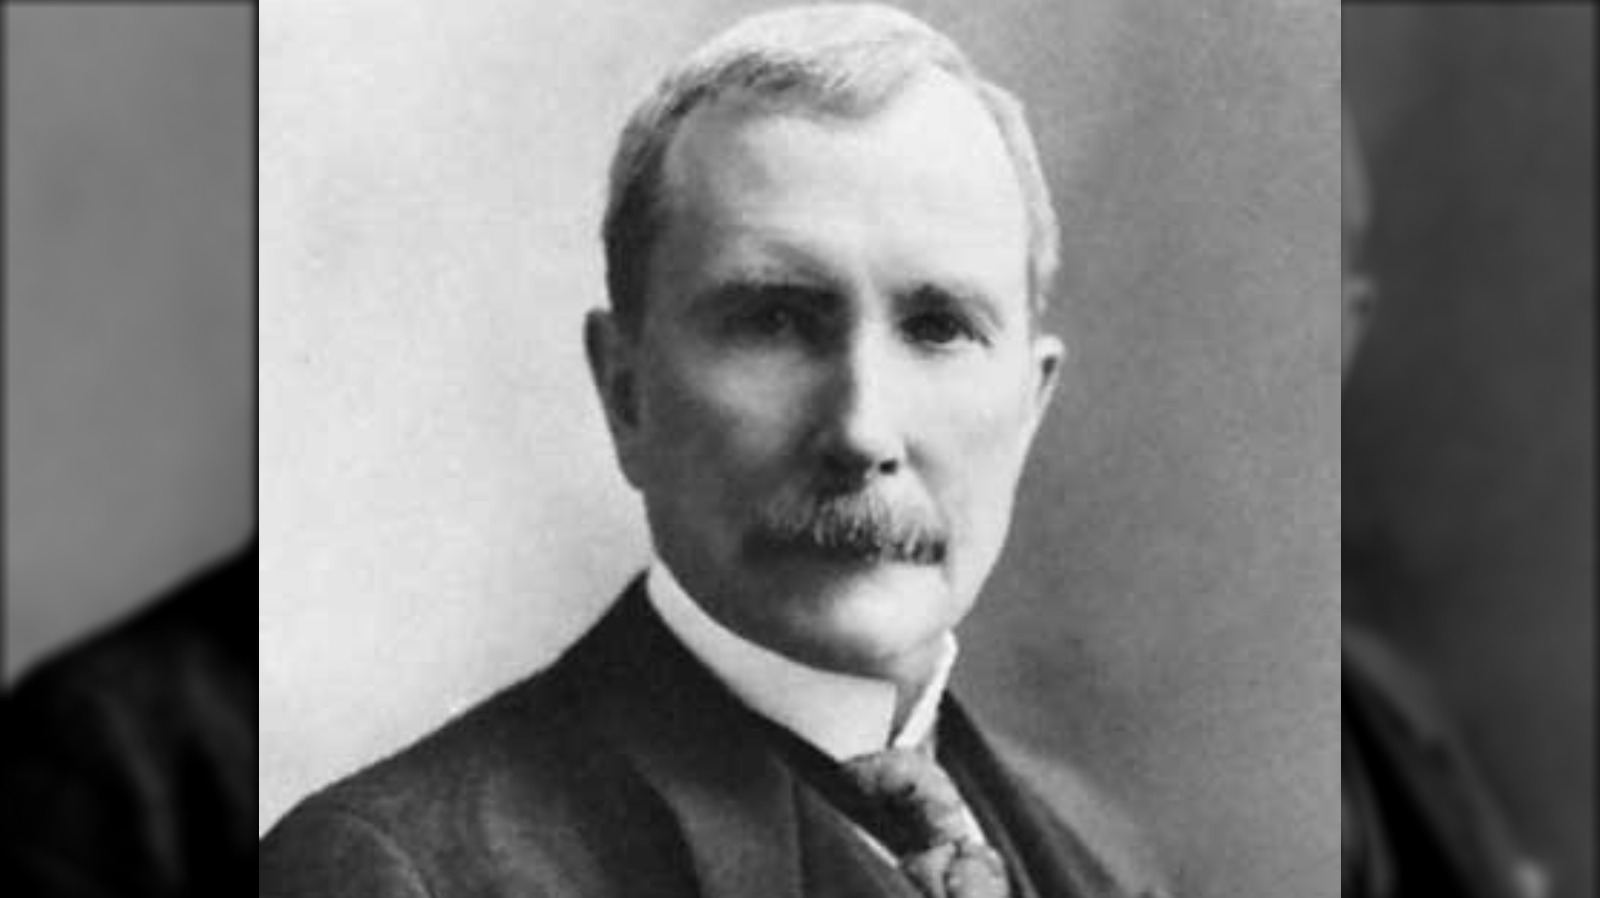 John D. Rockefeller Jr. - Wikipedia